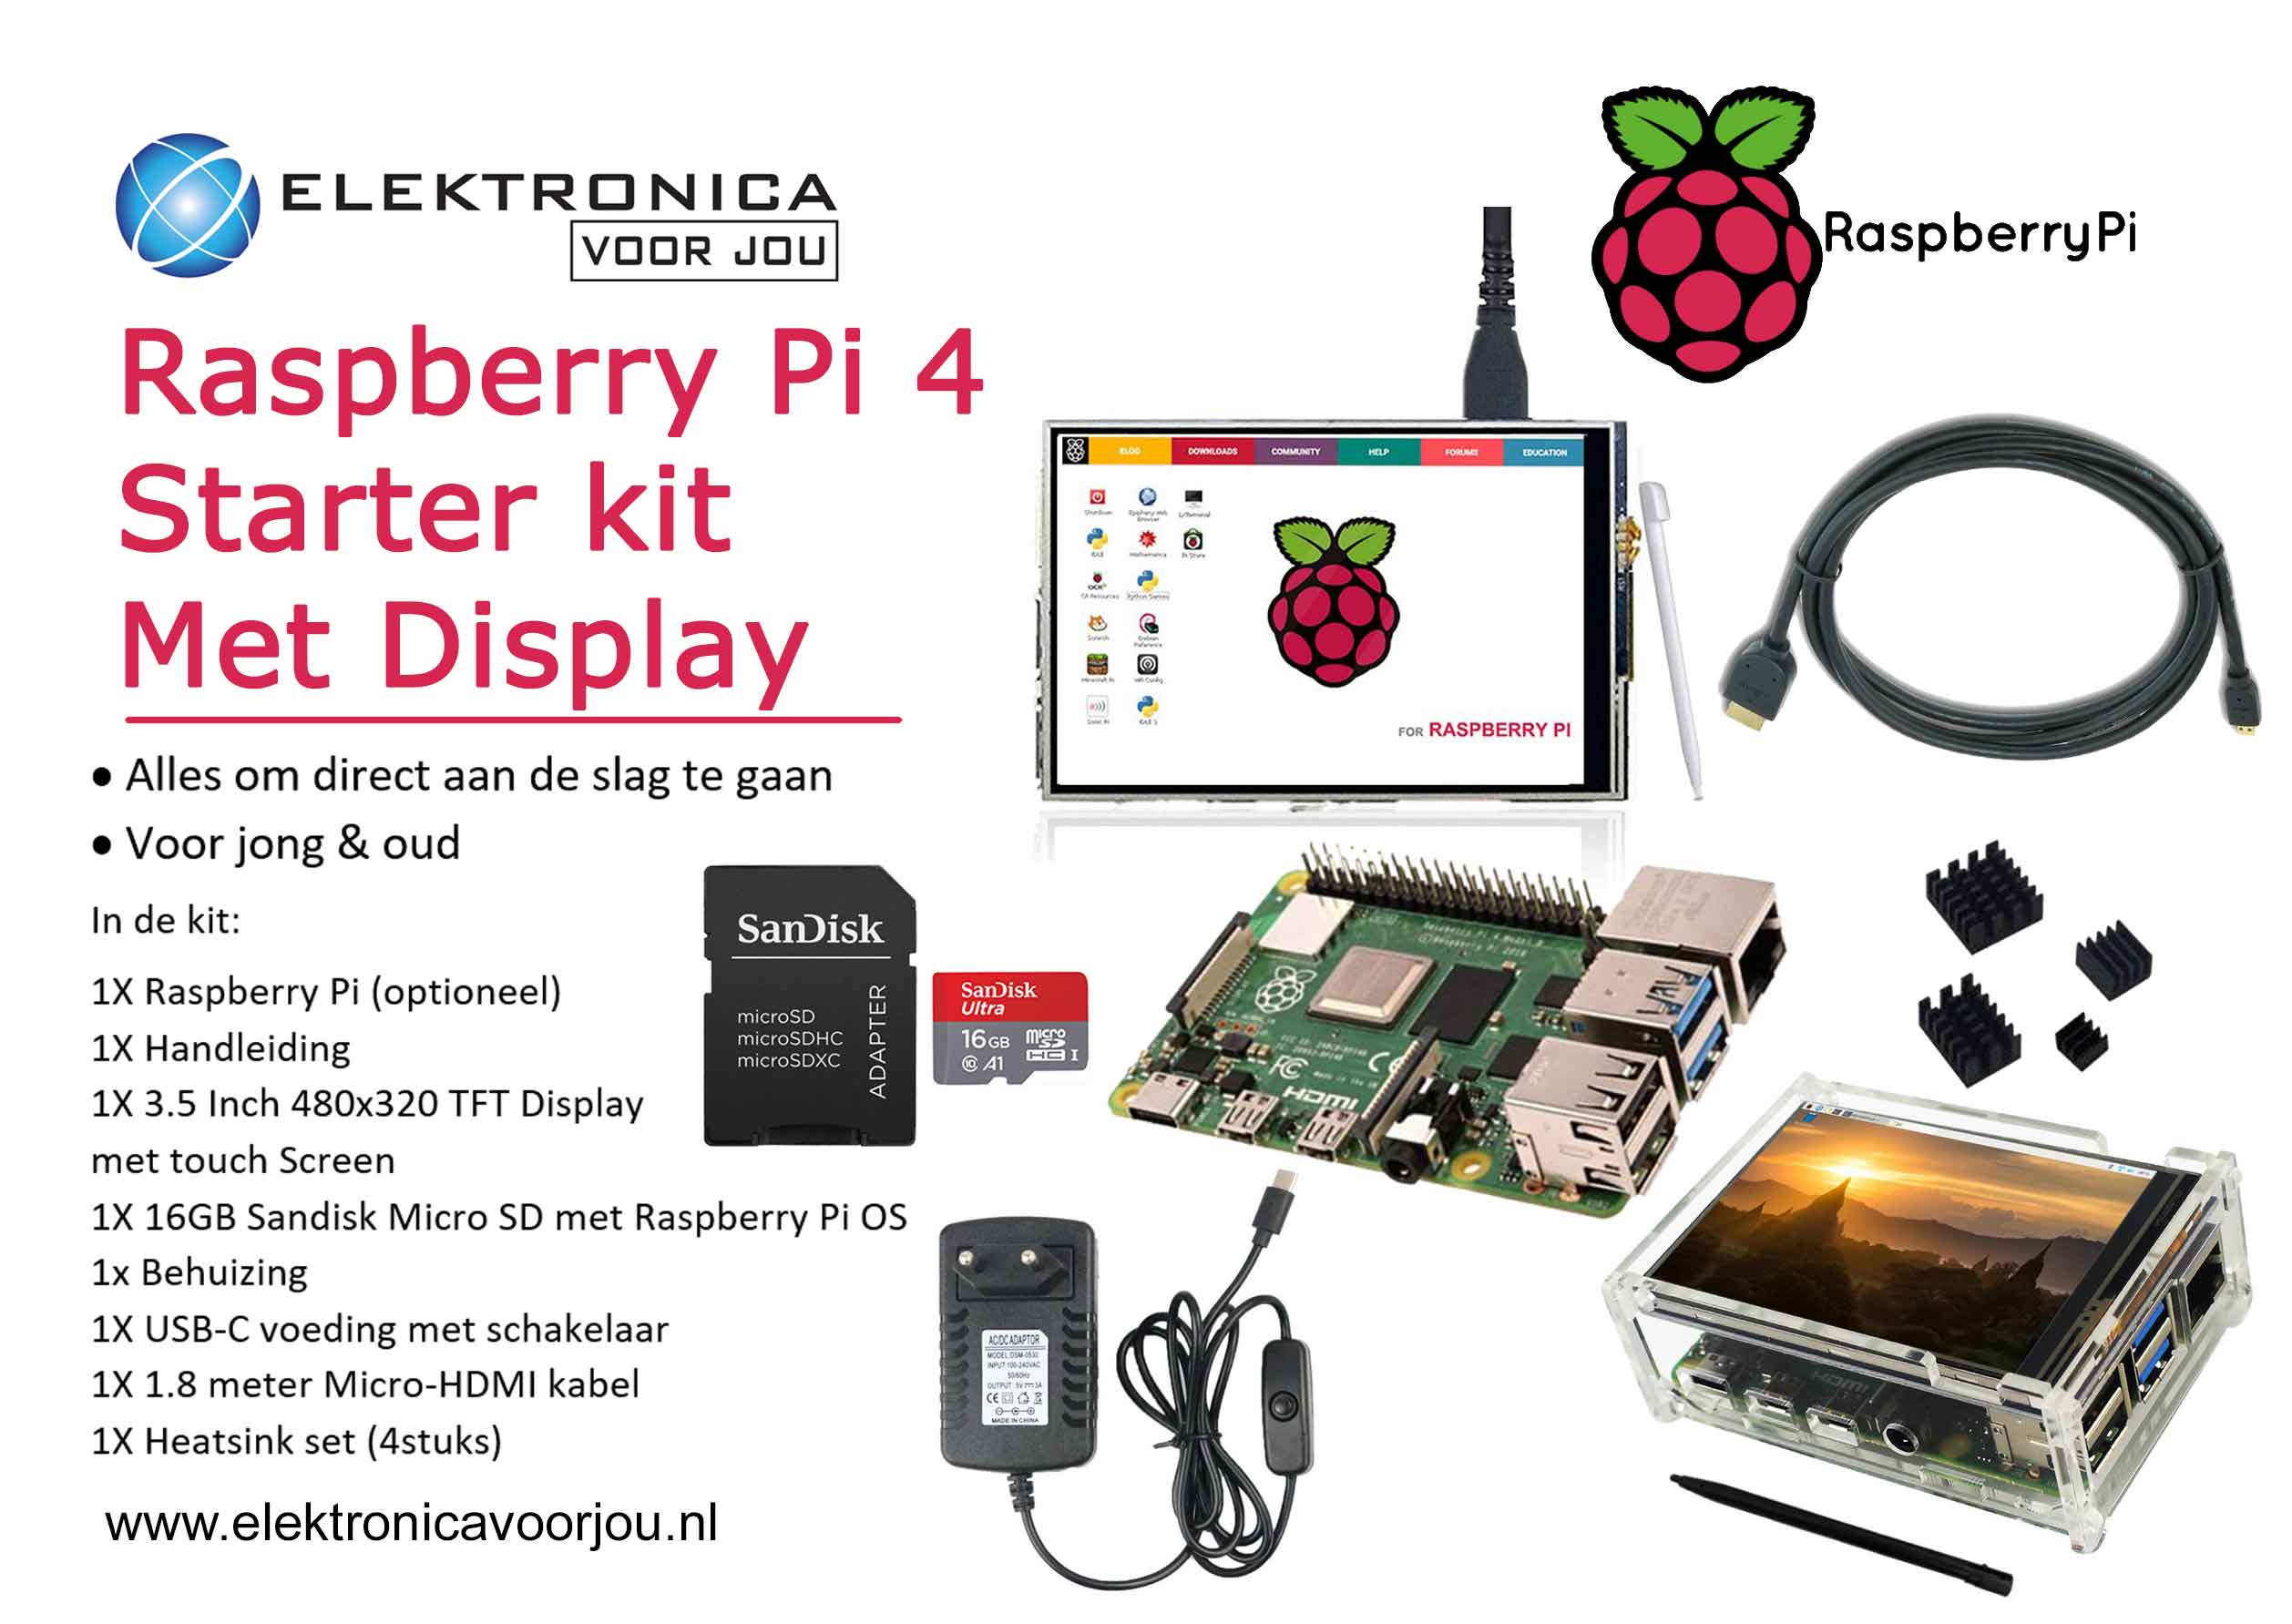 Raspberry Pi 4 starter kit met display